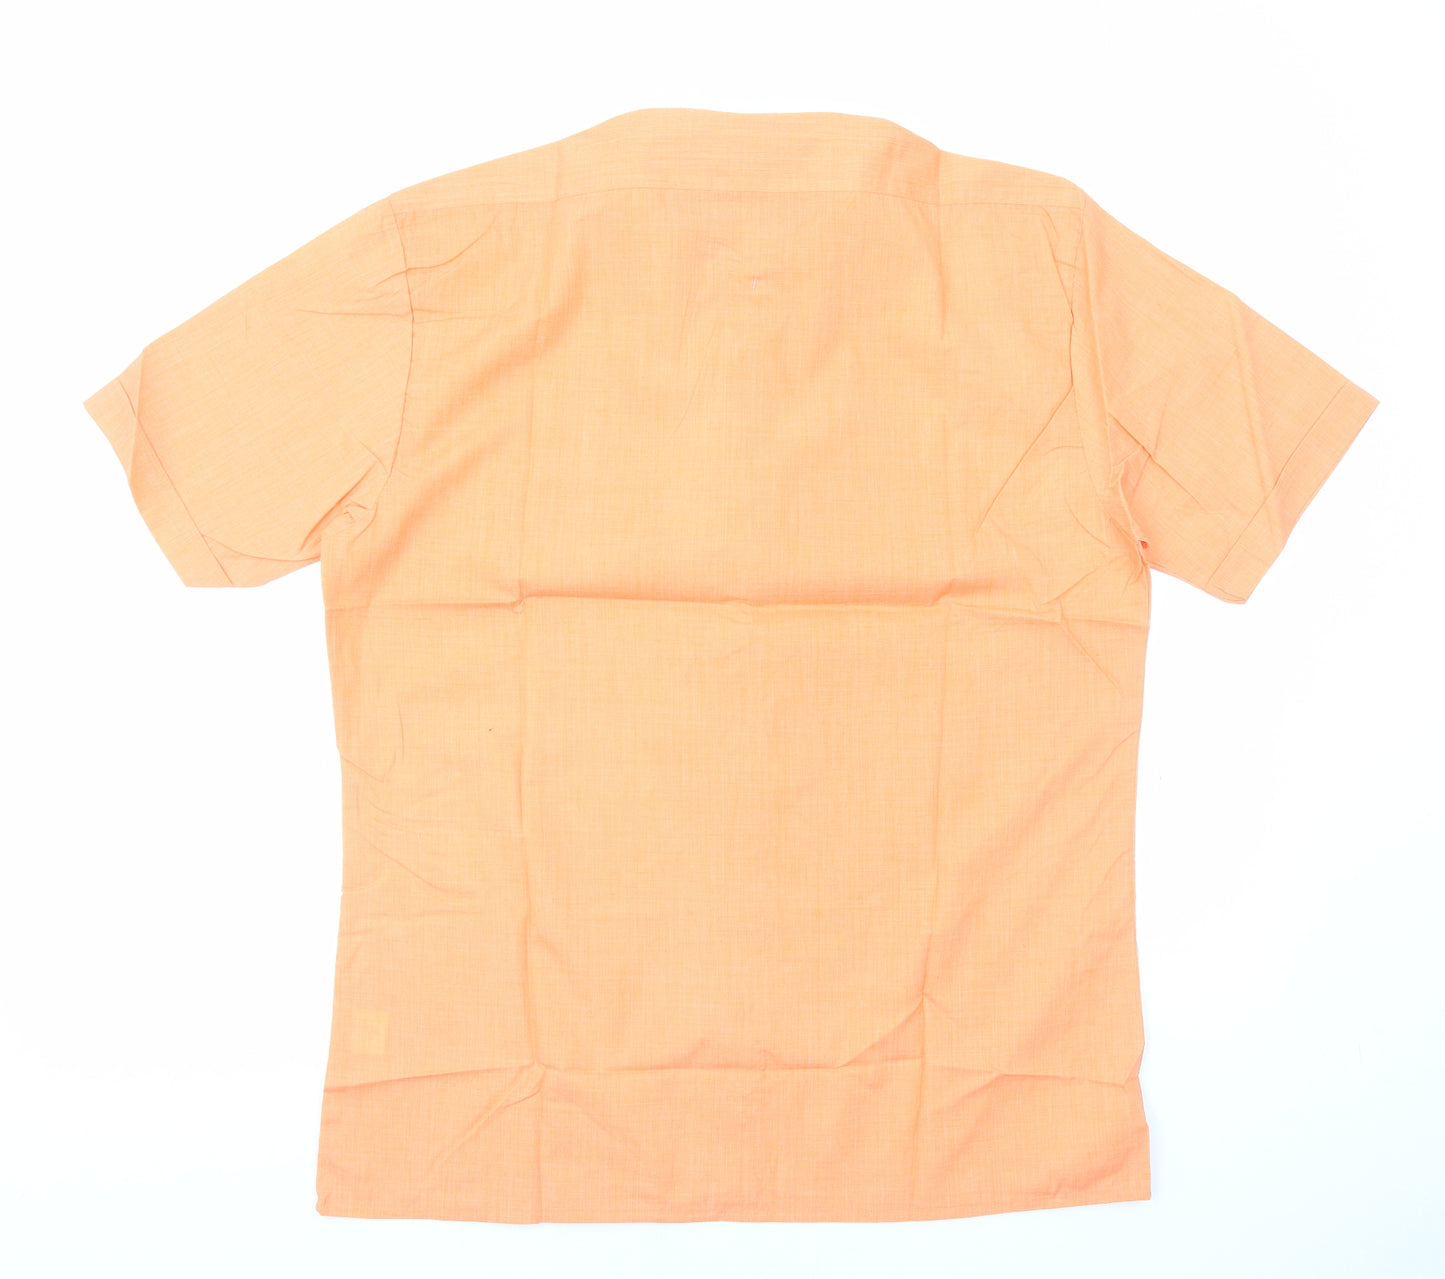 Smith & Turner Mens Orange Cotton Dress Shirt Size M Collared Button